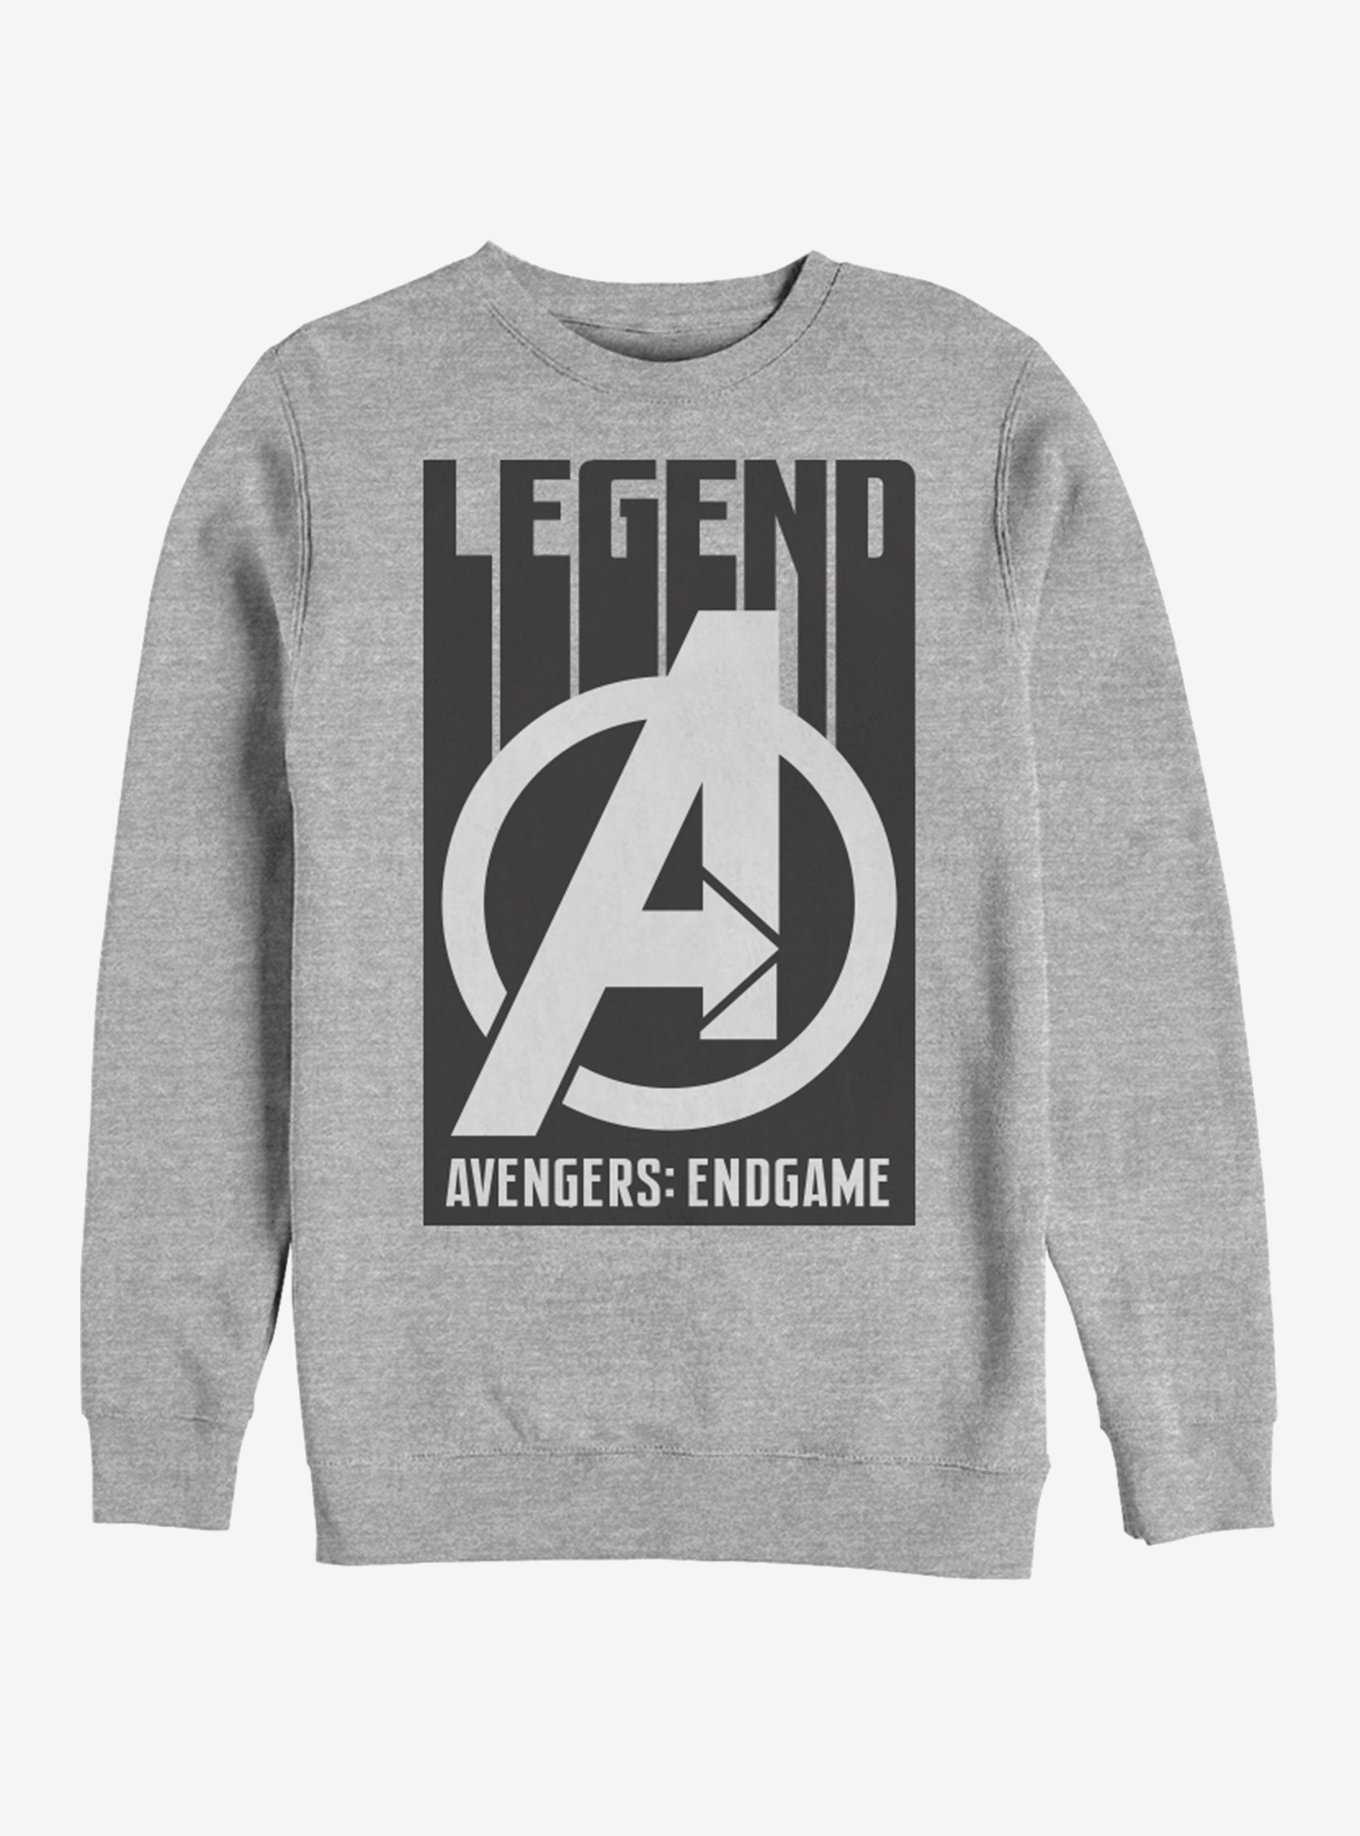 Marvel Avengers: Endgame Avengers Legend Heathered Sweatshirt, , hi-res